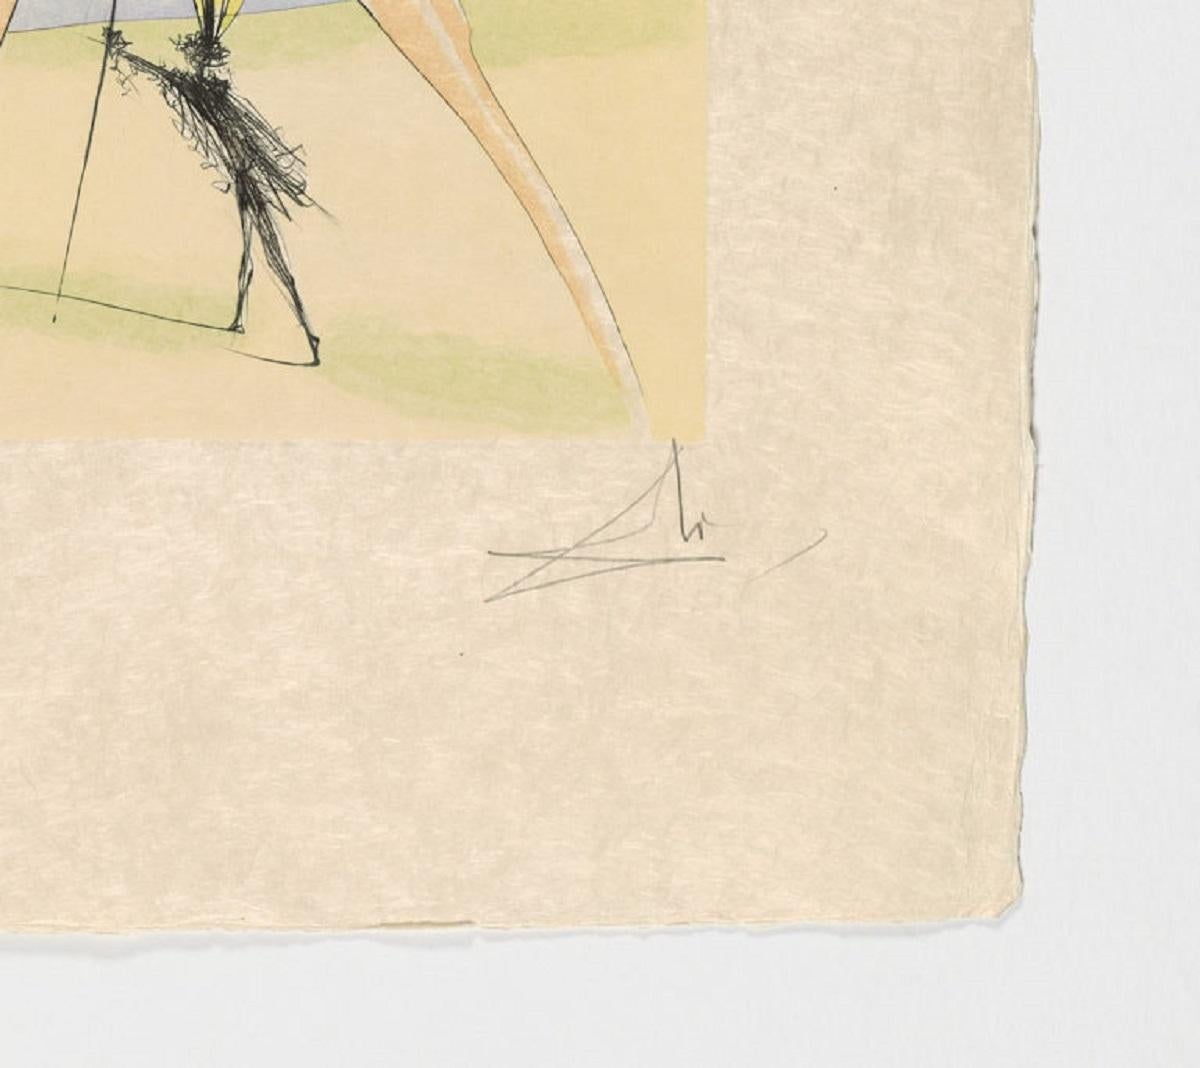 Salvador Dali (Spain, 1904-1989)
'Le Singe et le Léopard', 1974
Serie: Le Bestiaire de La Fontaine
dry point, aquatint on japanese paper
30.8 x 22.7 in. (78 x 57.5 cm.)
Edition of 250
Unframed
ID: DAL2001-009
Hand-signed by author
It appears